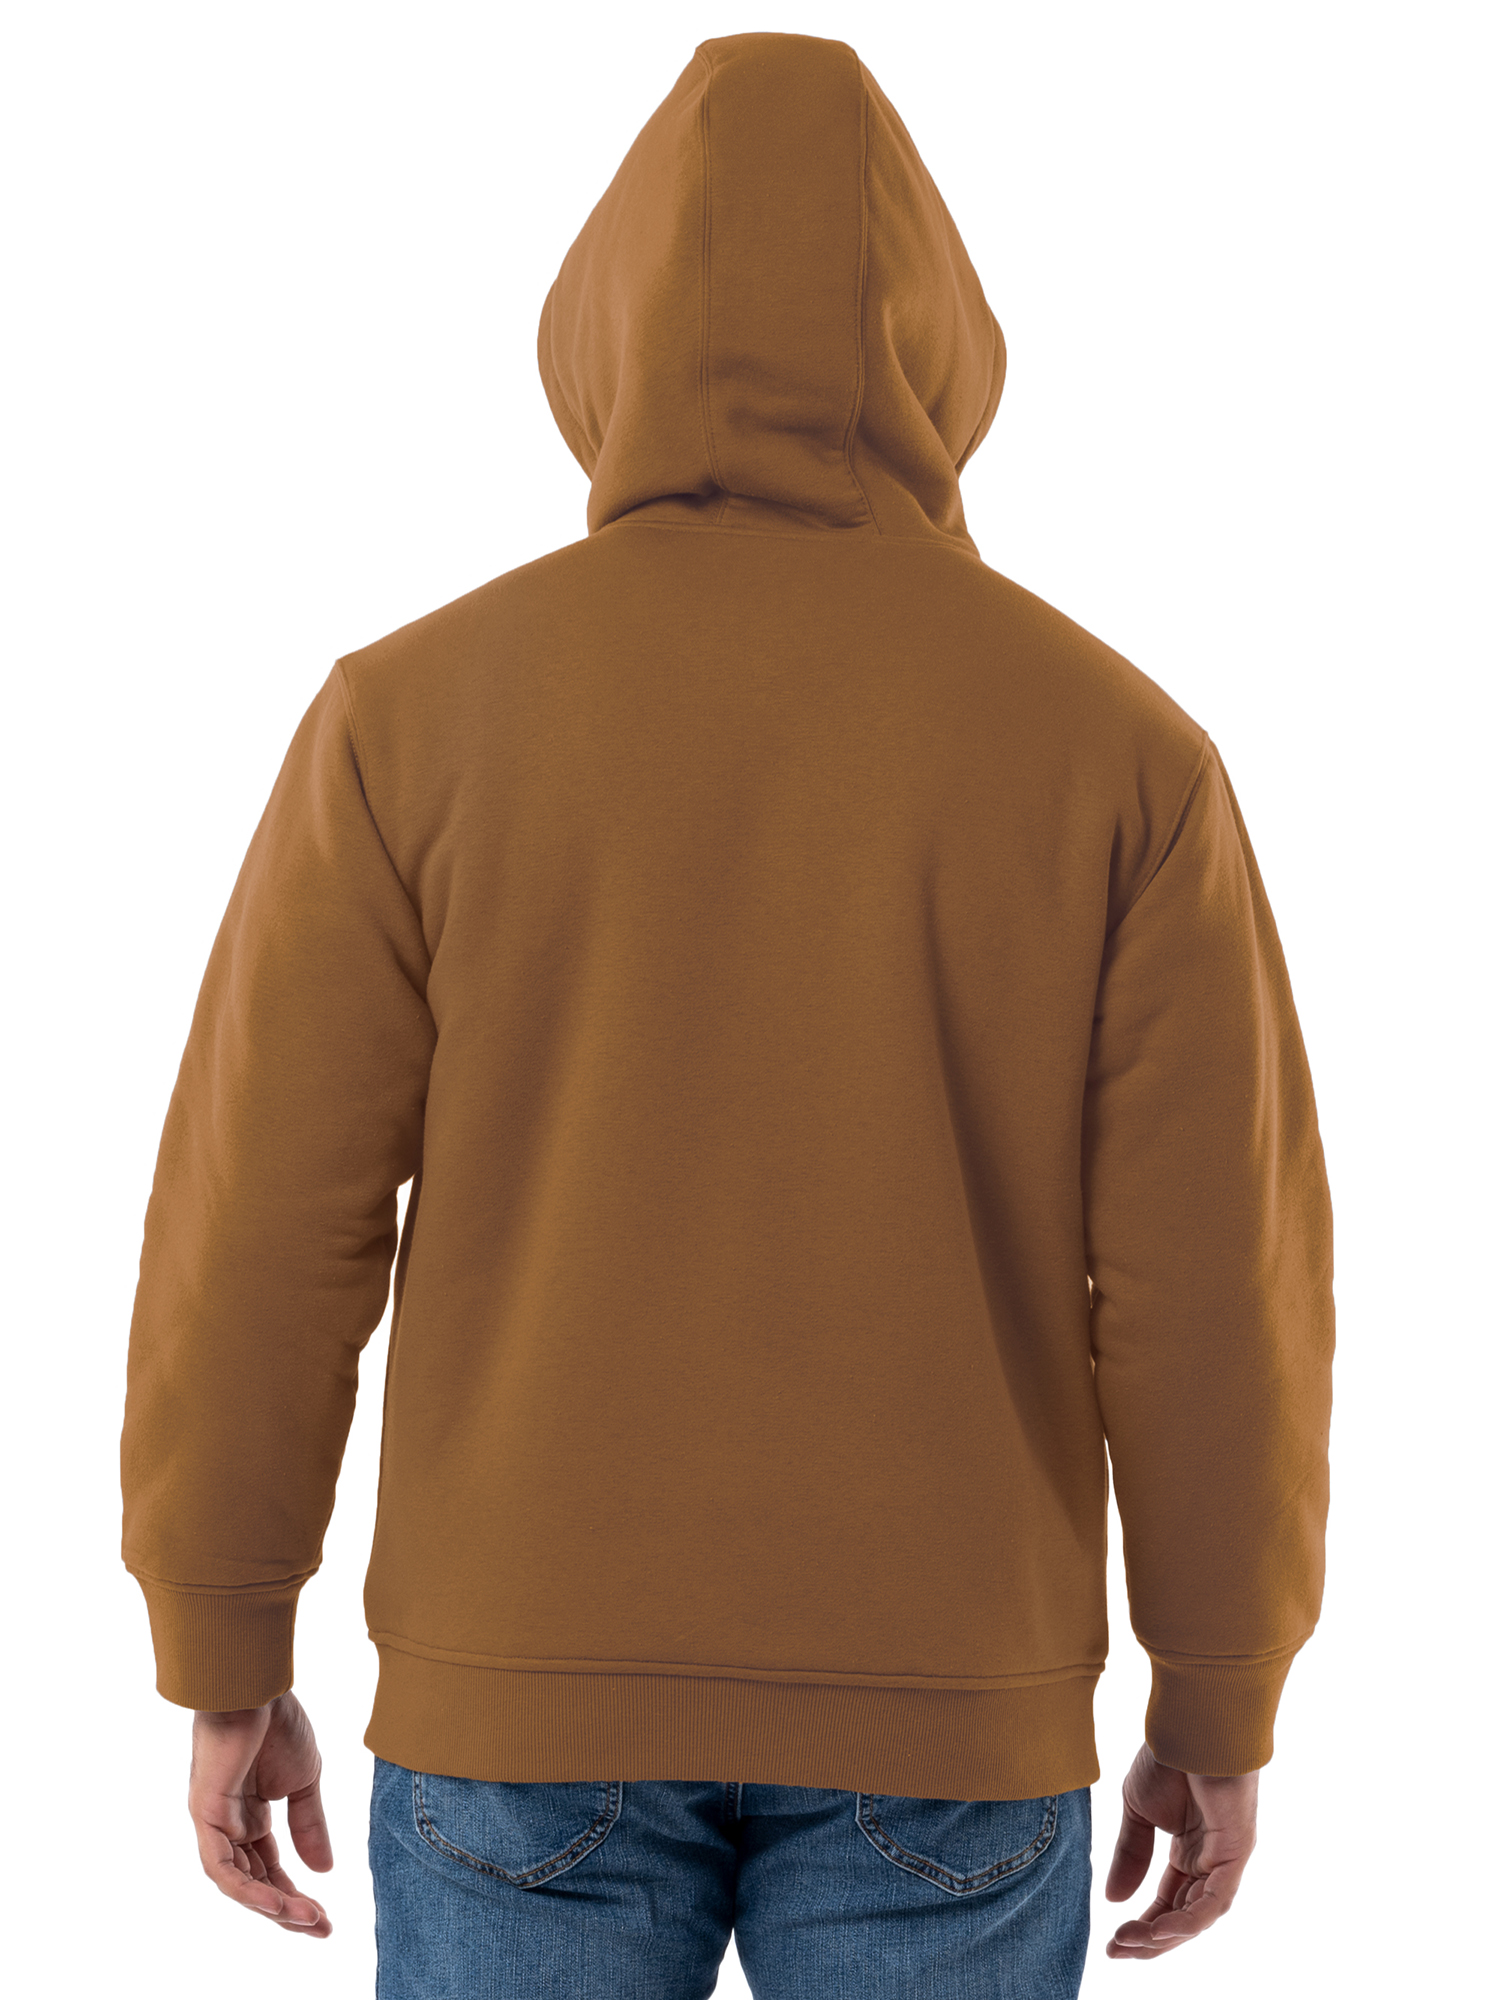 Wrangler Workwear Men's & Big Men's Full Zip Sherpa Lined Hooded Sweatshirt, Sizes S-5XL - image 2 of 8